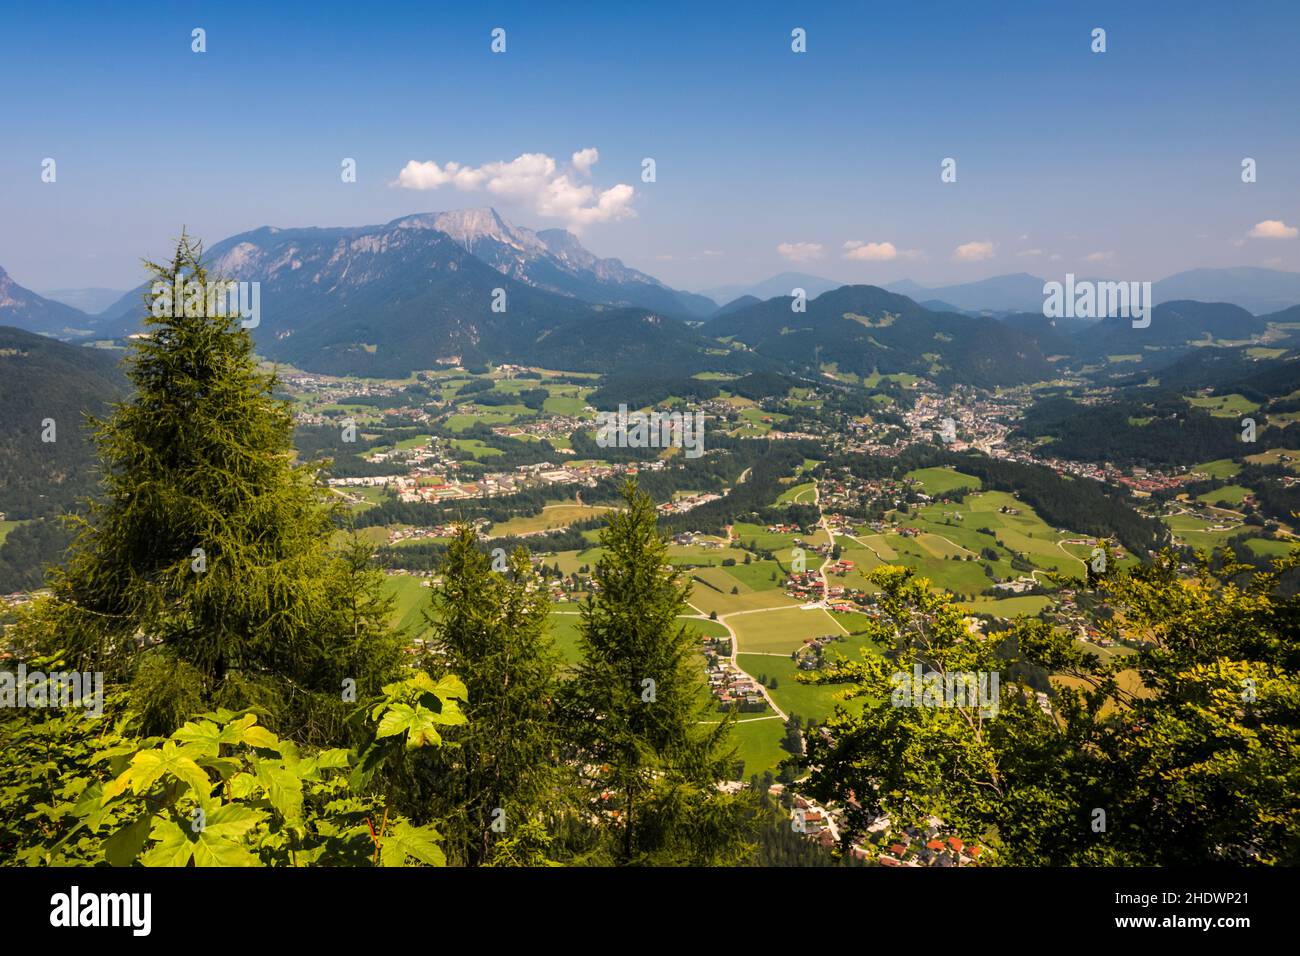 Beautiful scenery of Bad Reichenhall city from mountain Gruenstein, Alp mountains, Germany Stock Photo